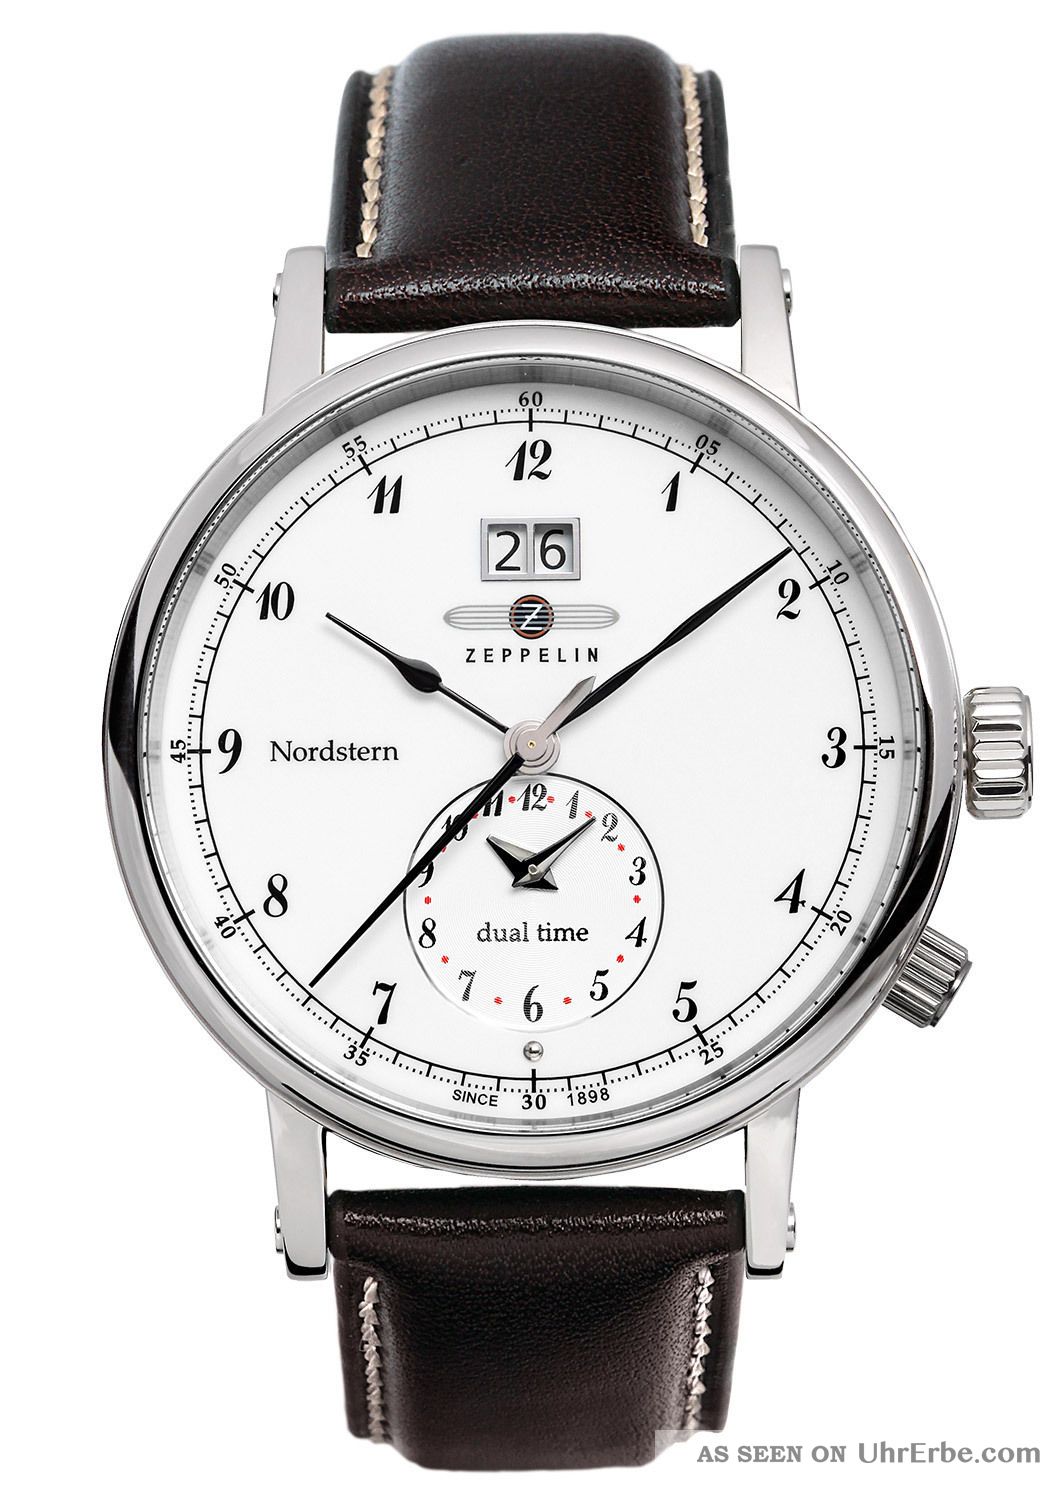 Zeppelin Nordstern Herren Uhr 7540 - 1 Armbanduhren Bild